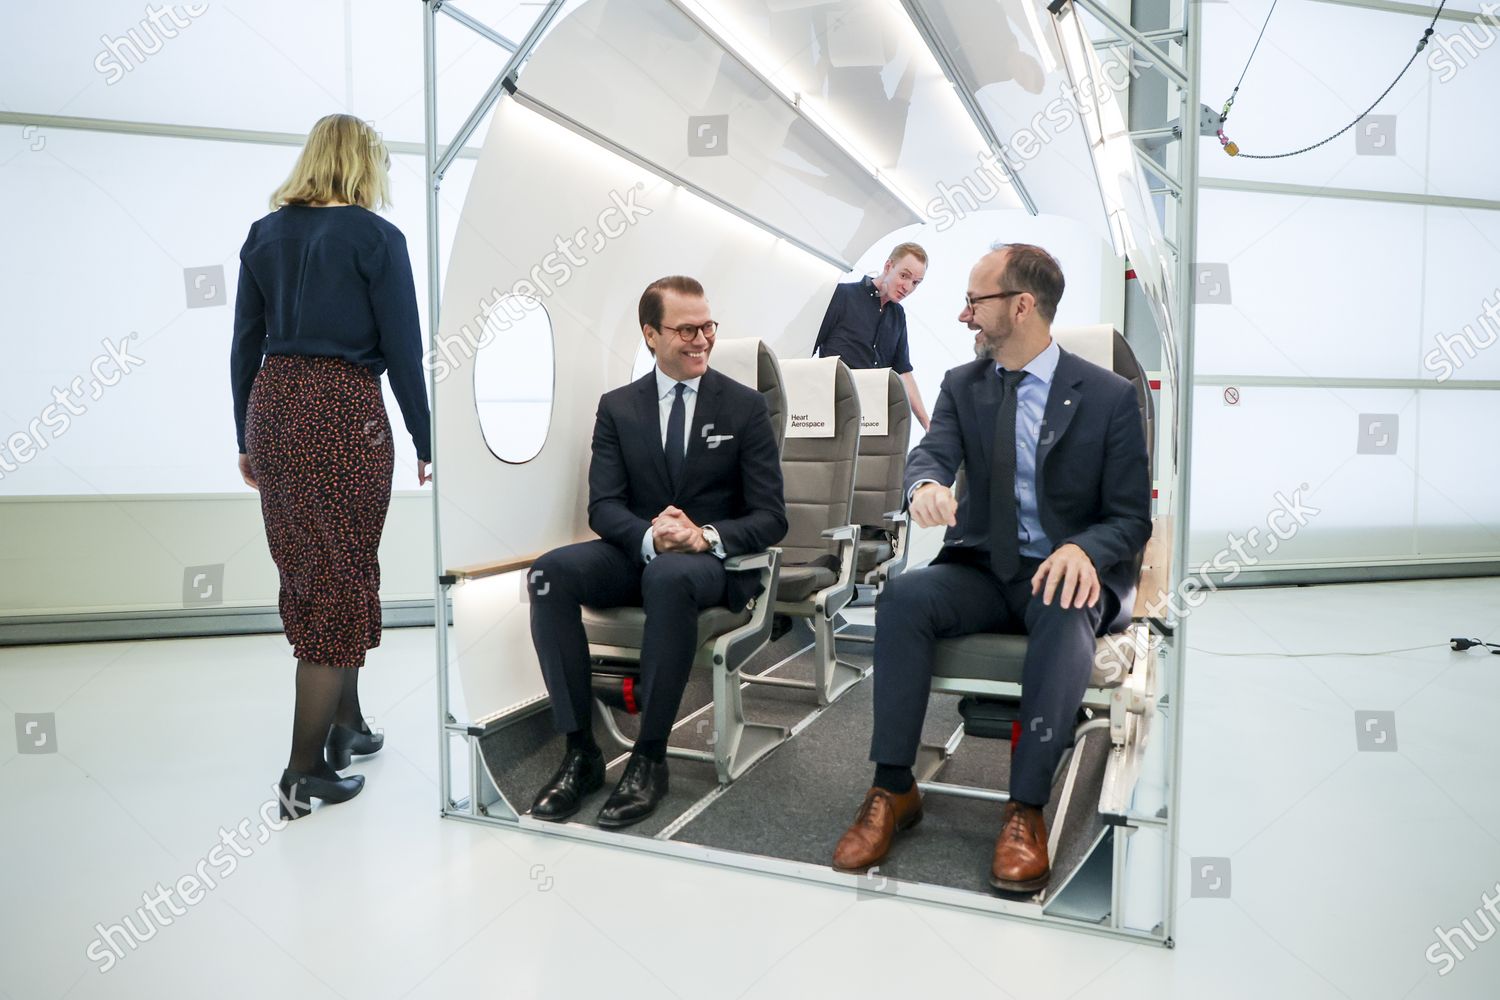 prince-daniel-visits-heart-aerospaces-exhibition-save-airport-gothenburg-sweden-shutterstock-editorial-10786435k.jpg